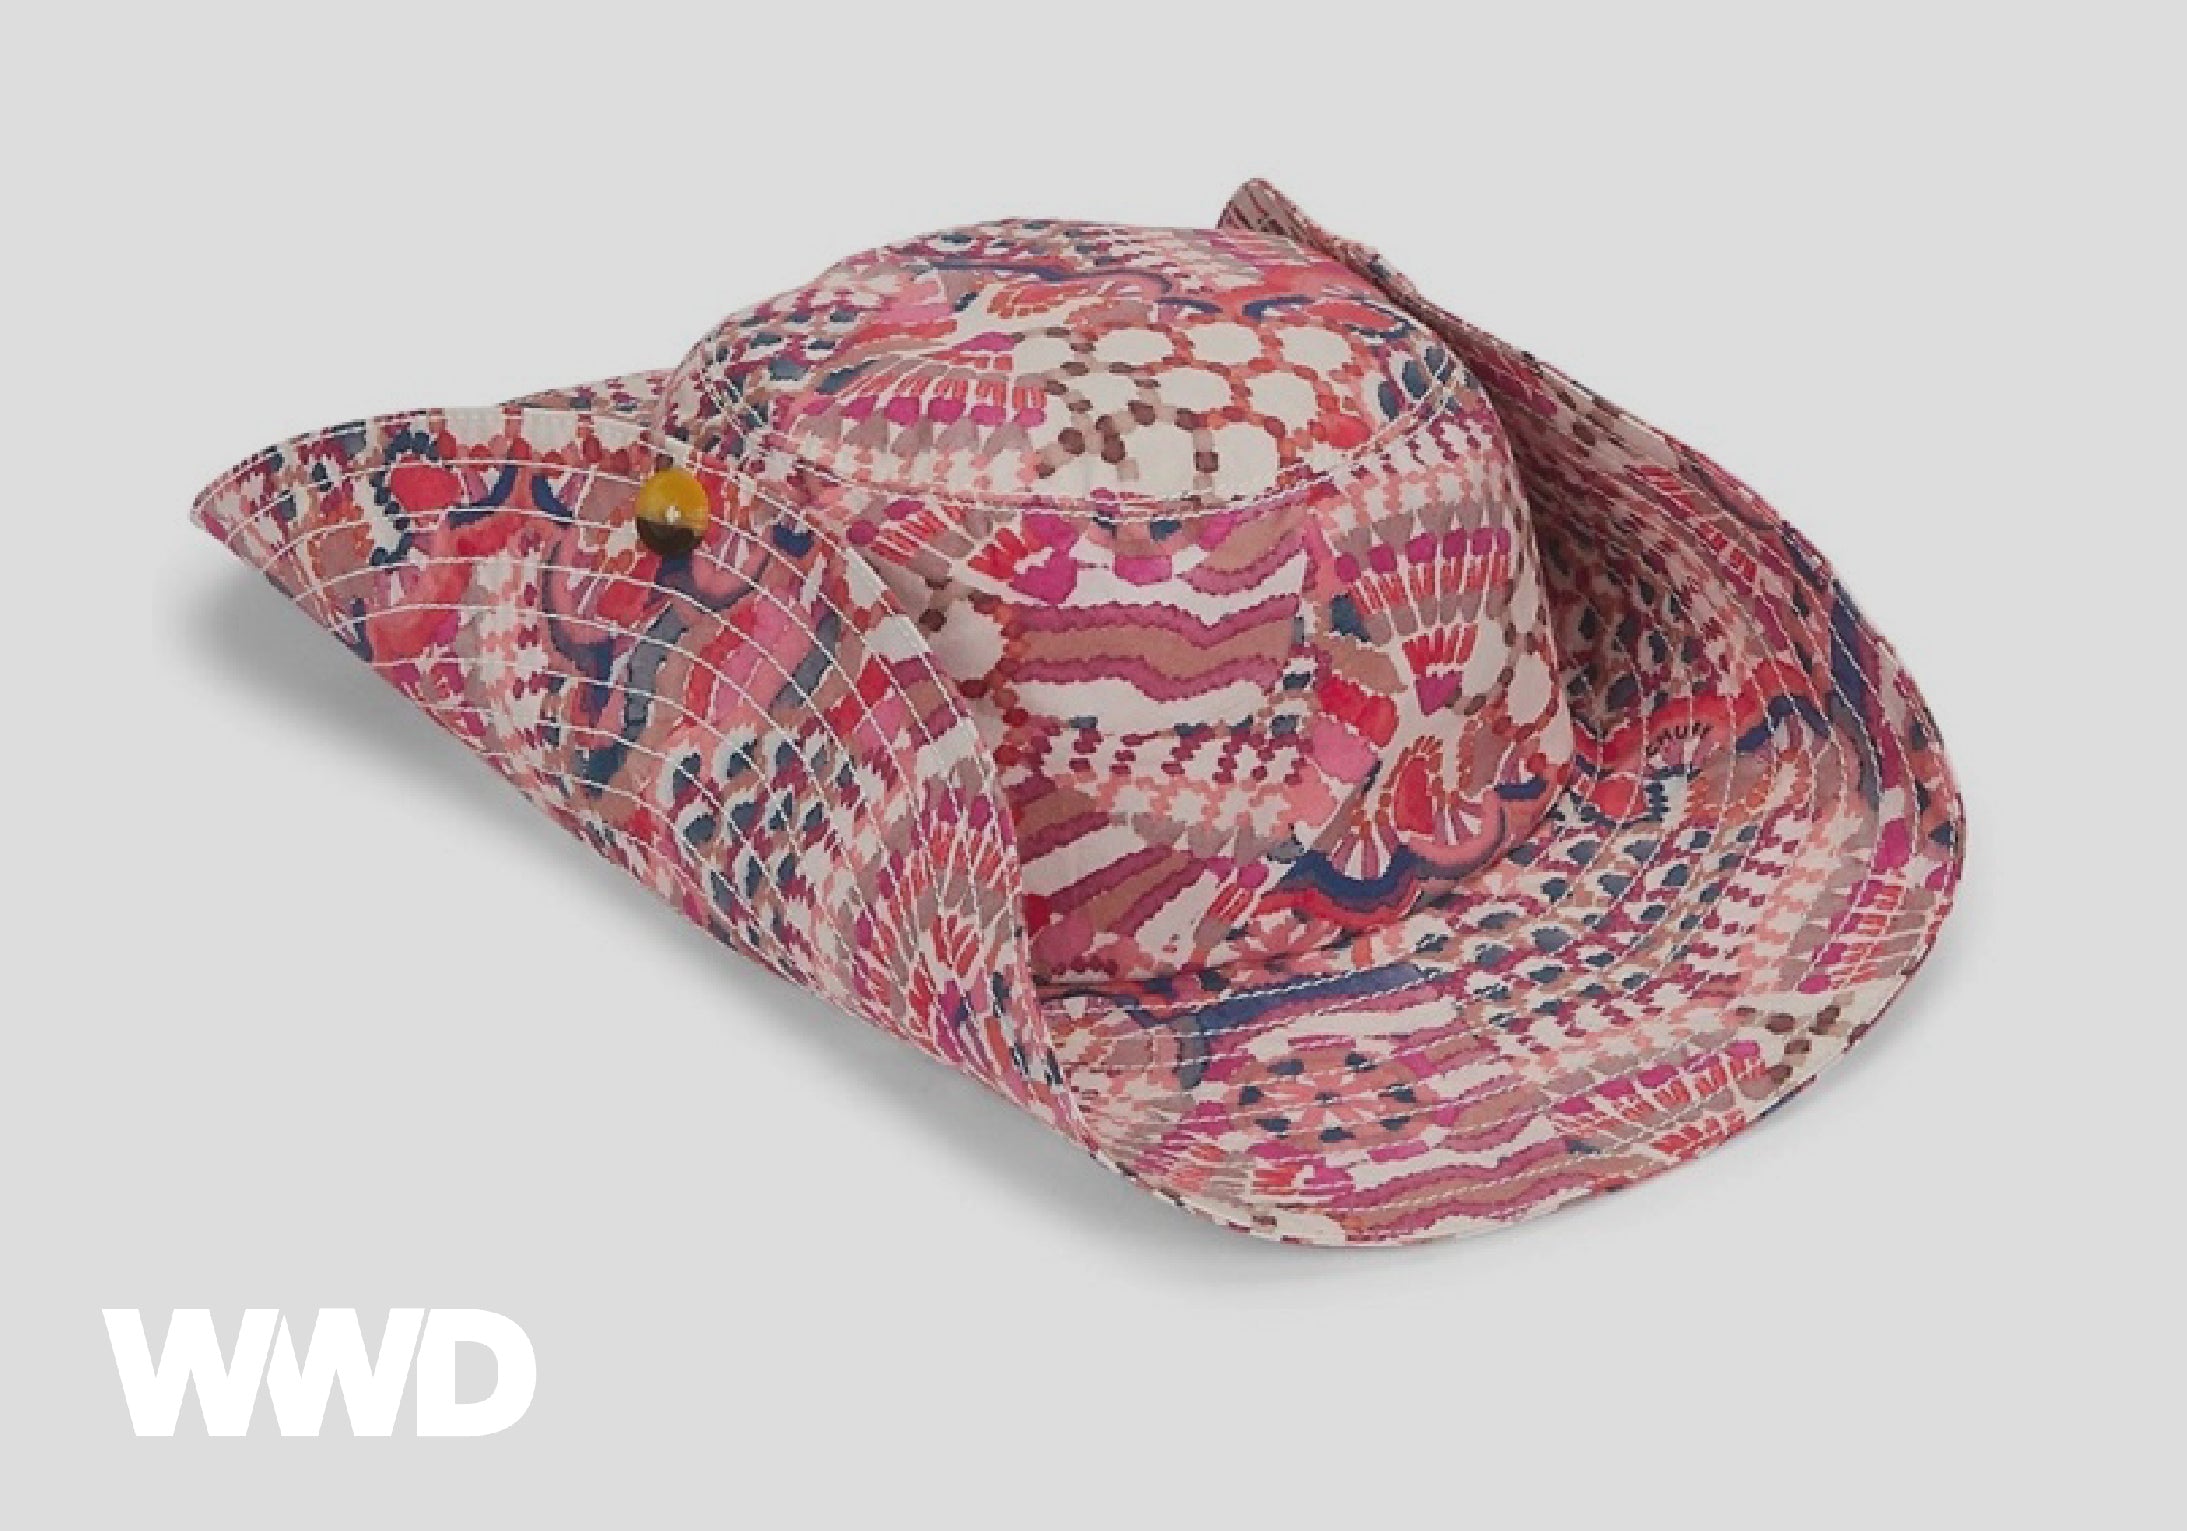 WWD - The 30 Best Sun Hats to Wear This Summer